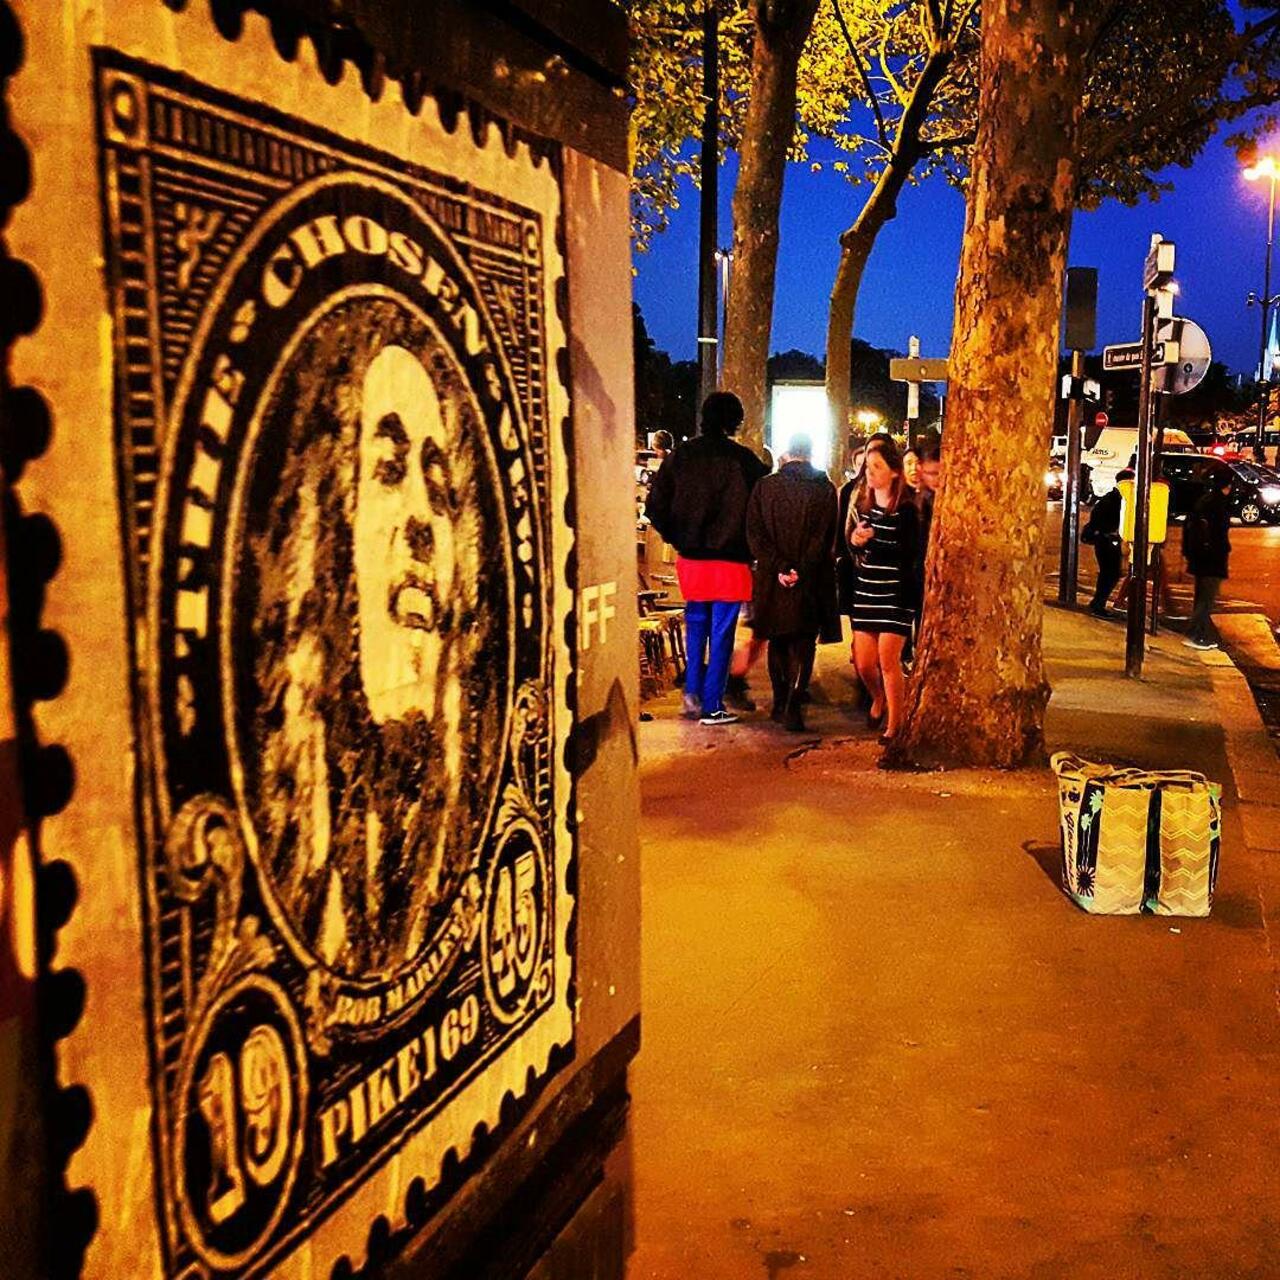 #Paris #graffiti photo by @the169 http://ift.tt/1OdaNAb #StreetArt http://t.co/ZbapknrLG0